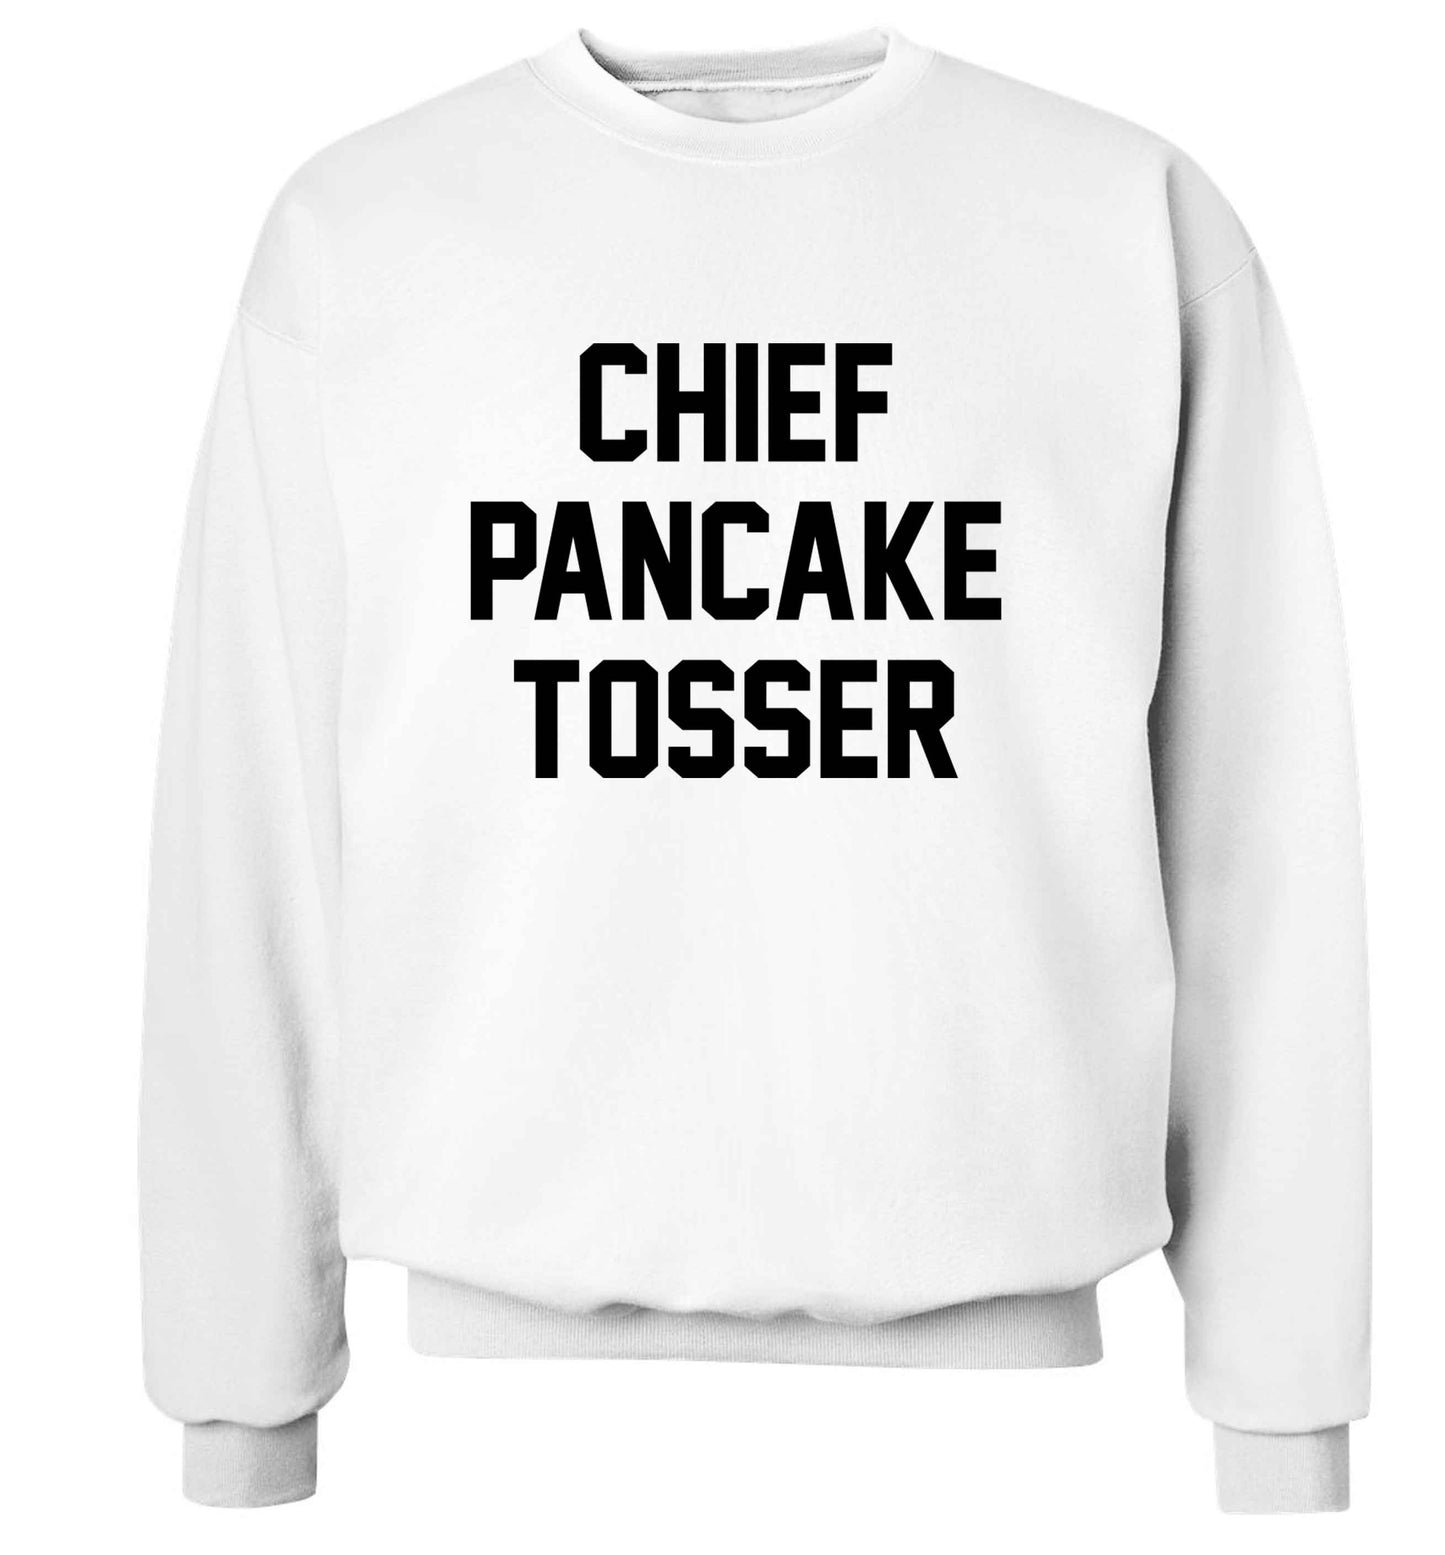 Chief pancake tosser adult's unisex white sweater 2XL